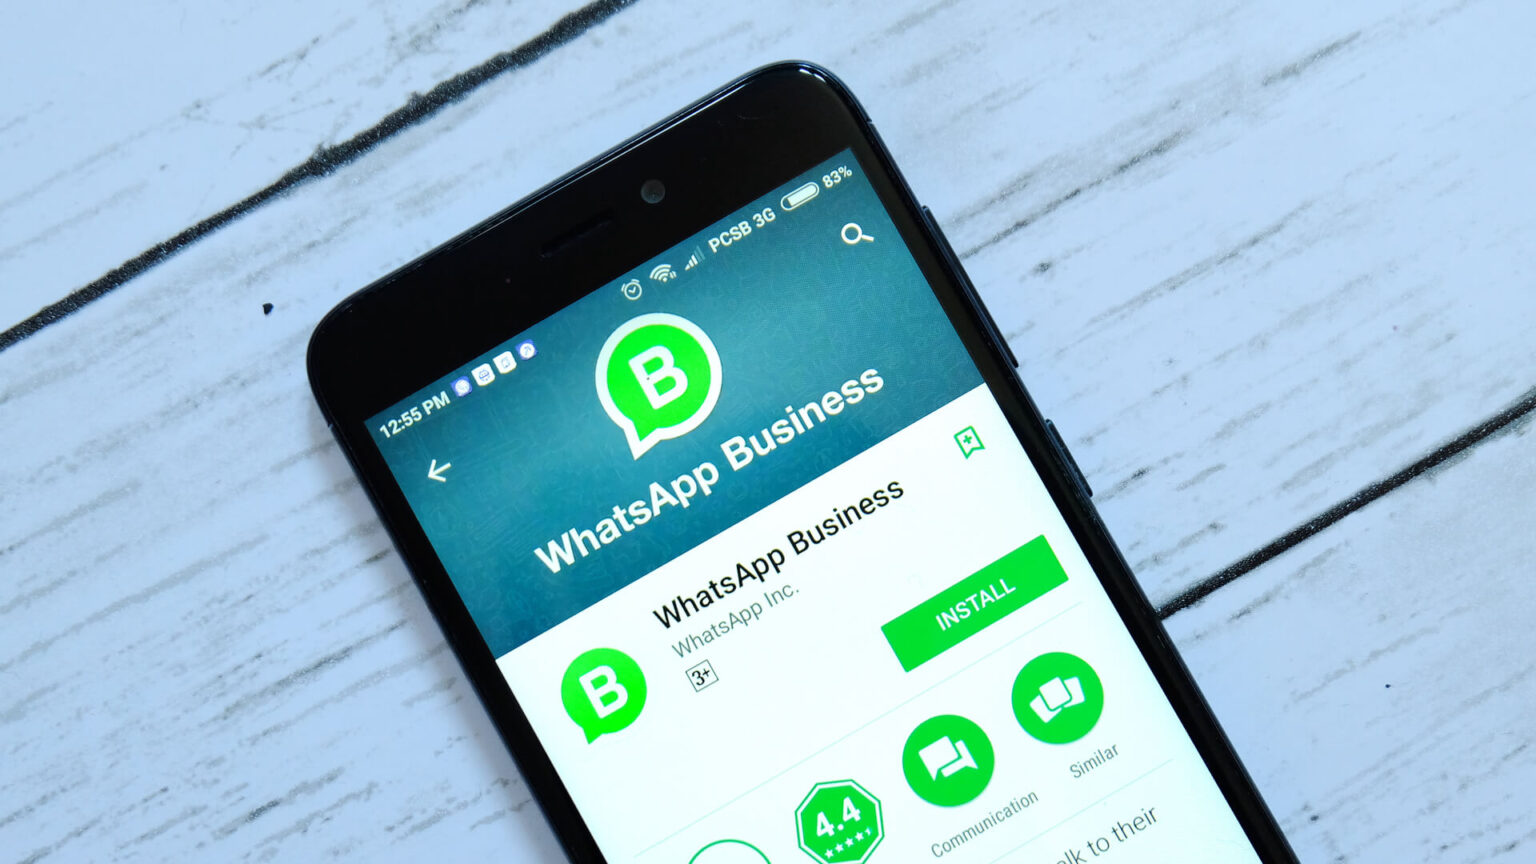 whatsapp business apk free download